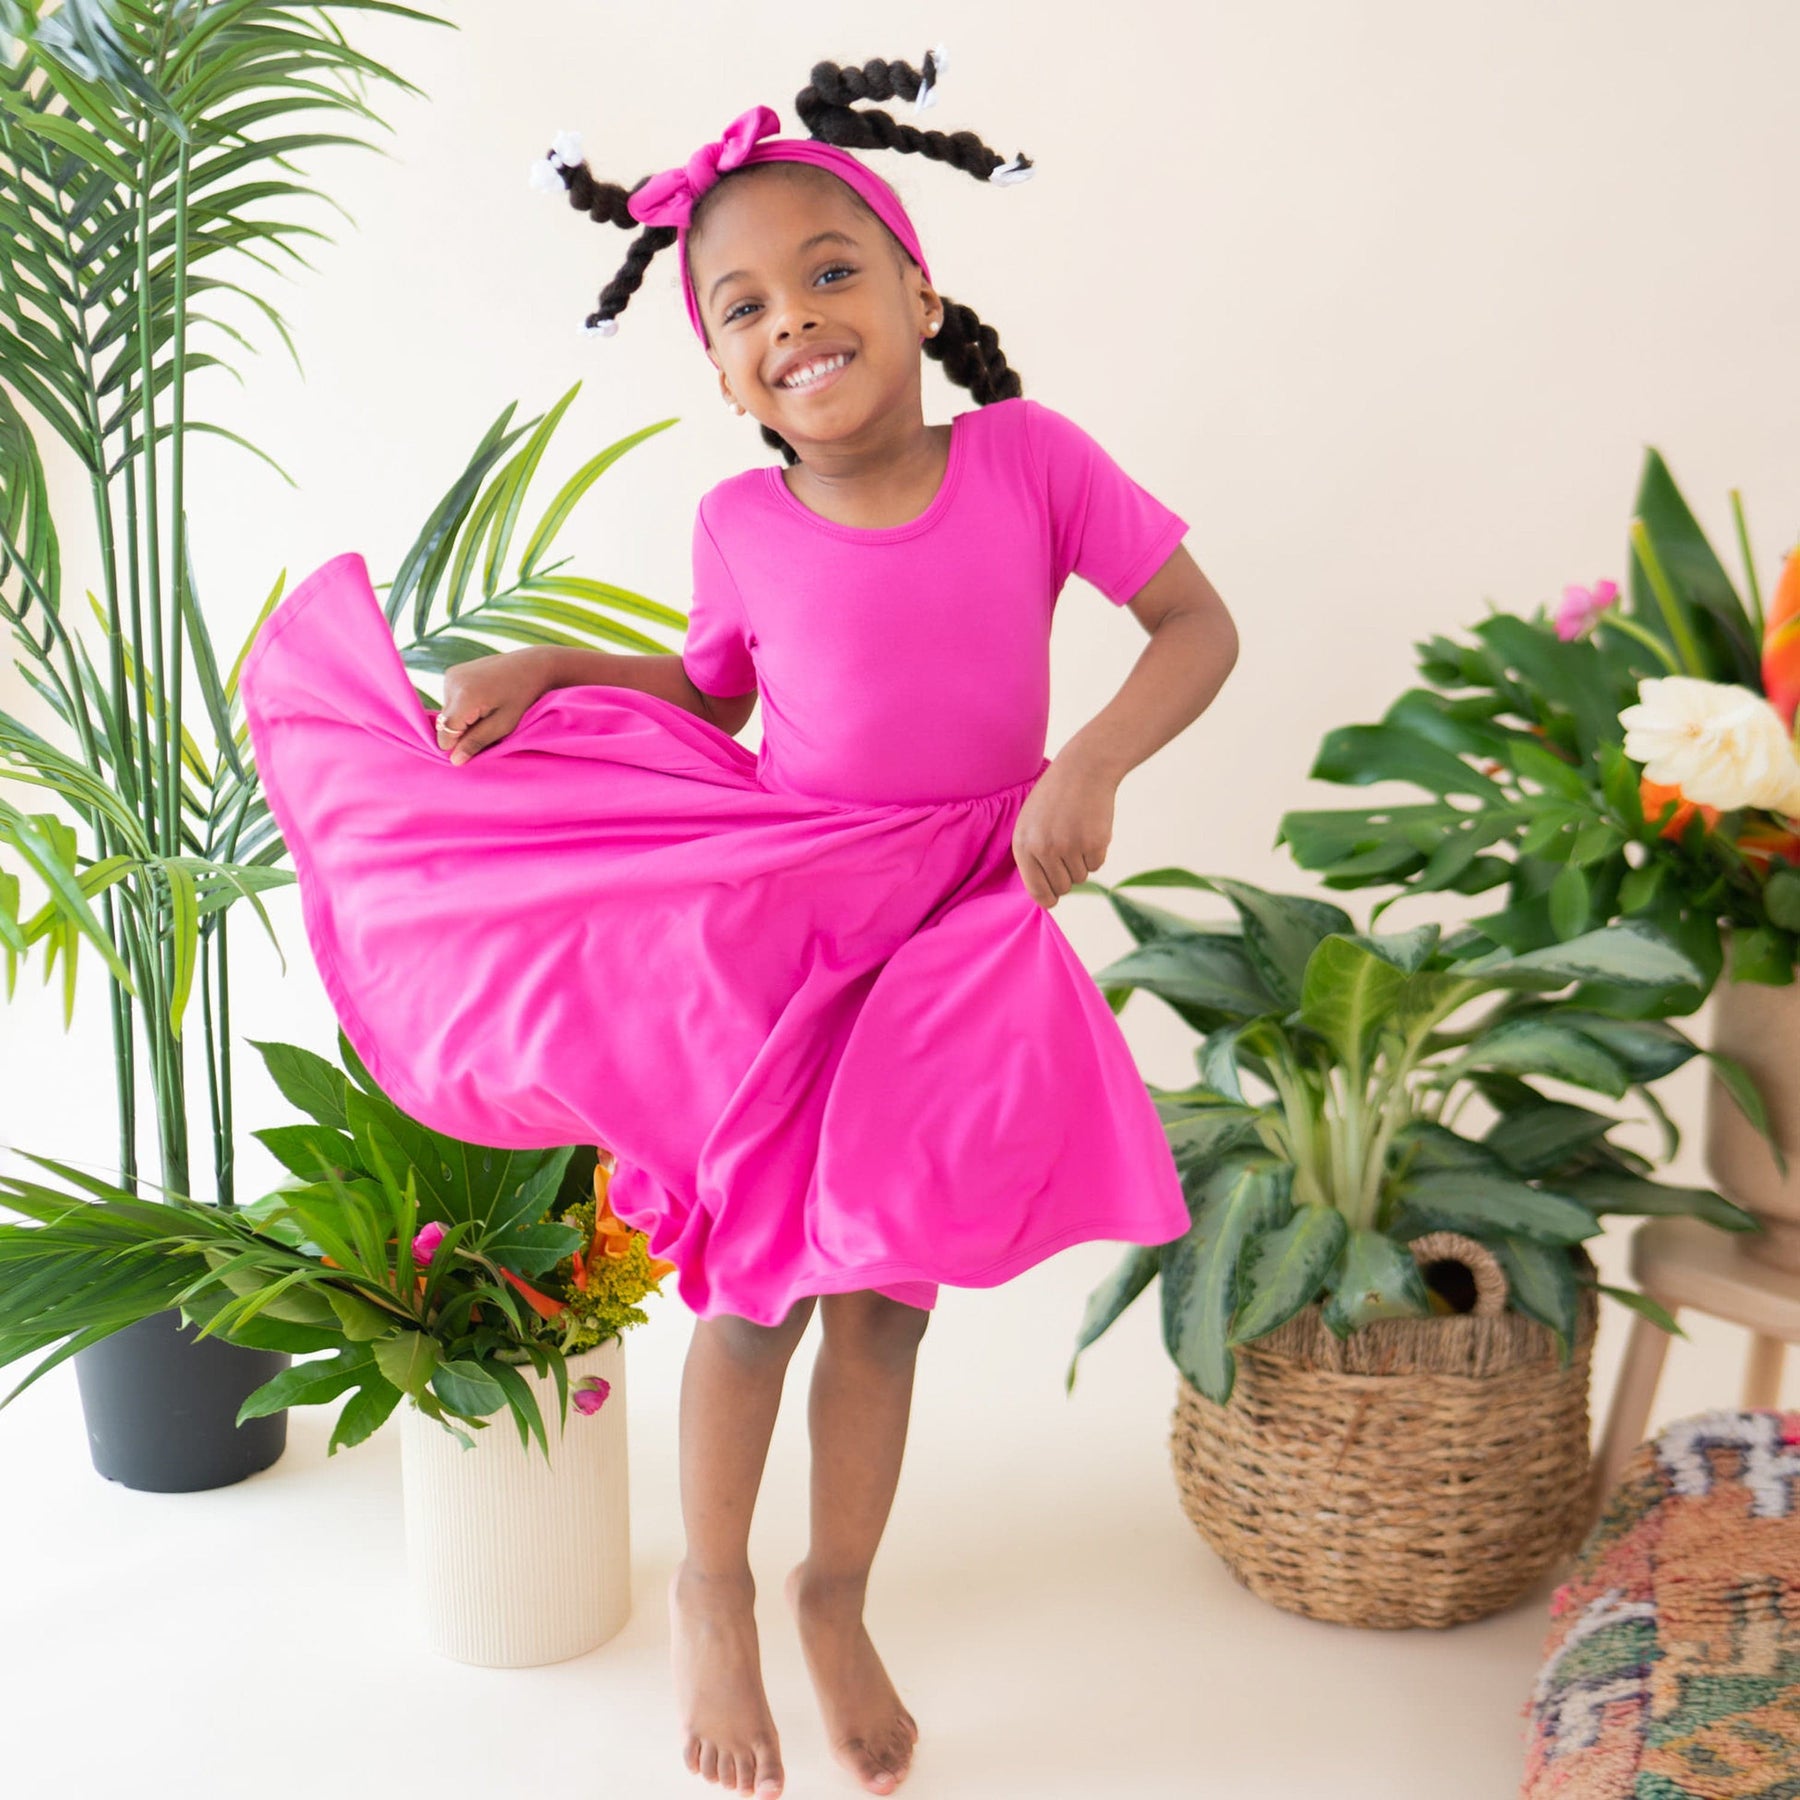 Kyte Baby Toddler Short Sleeve Twirl Dress Twirl Dress in Raspberry